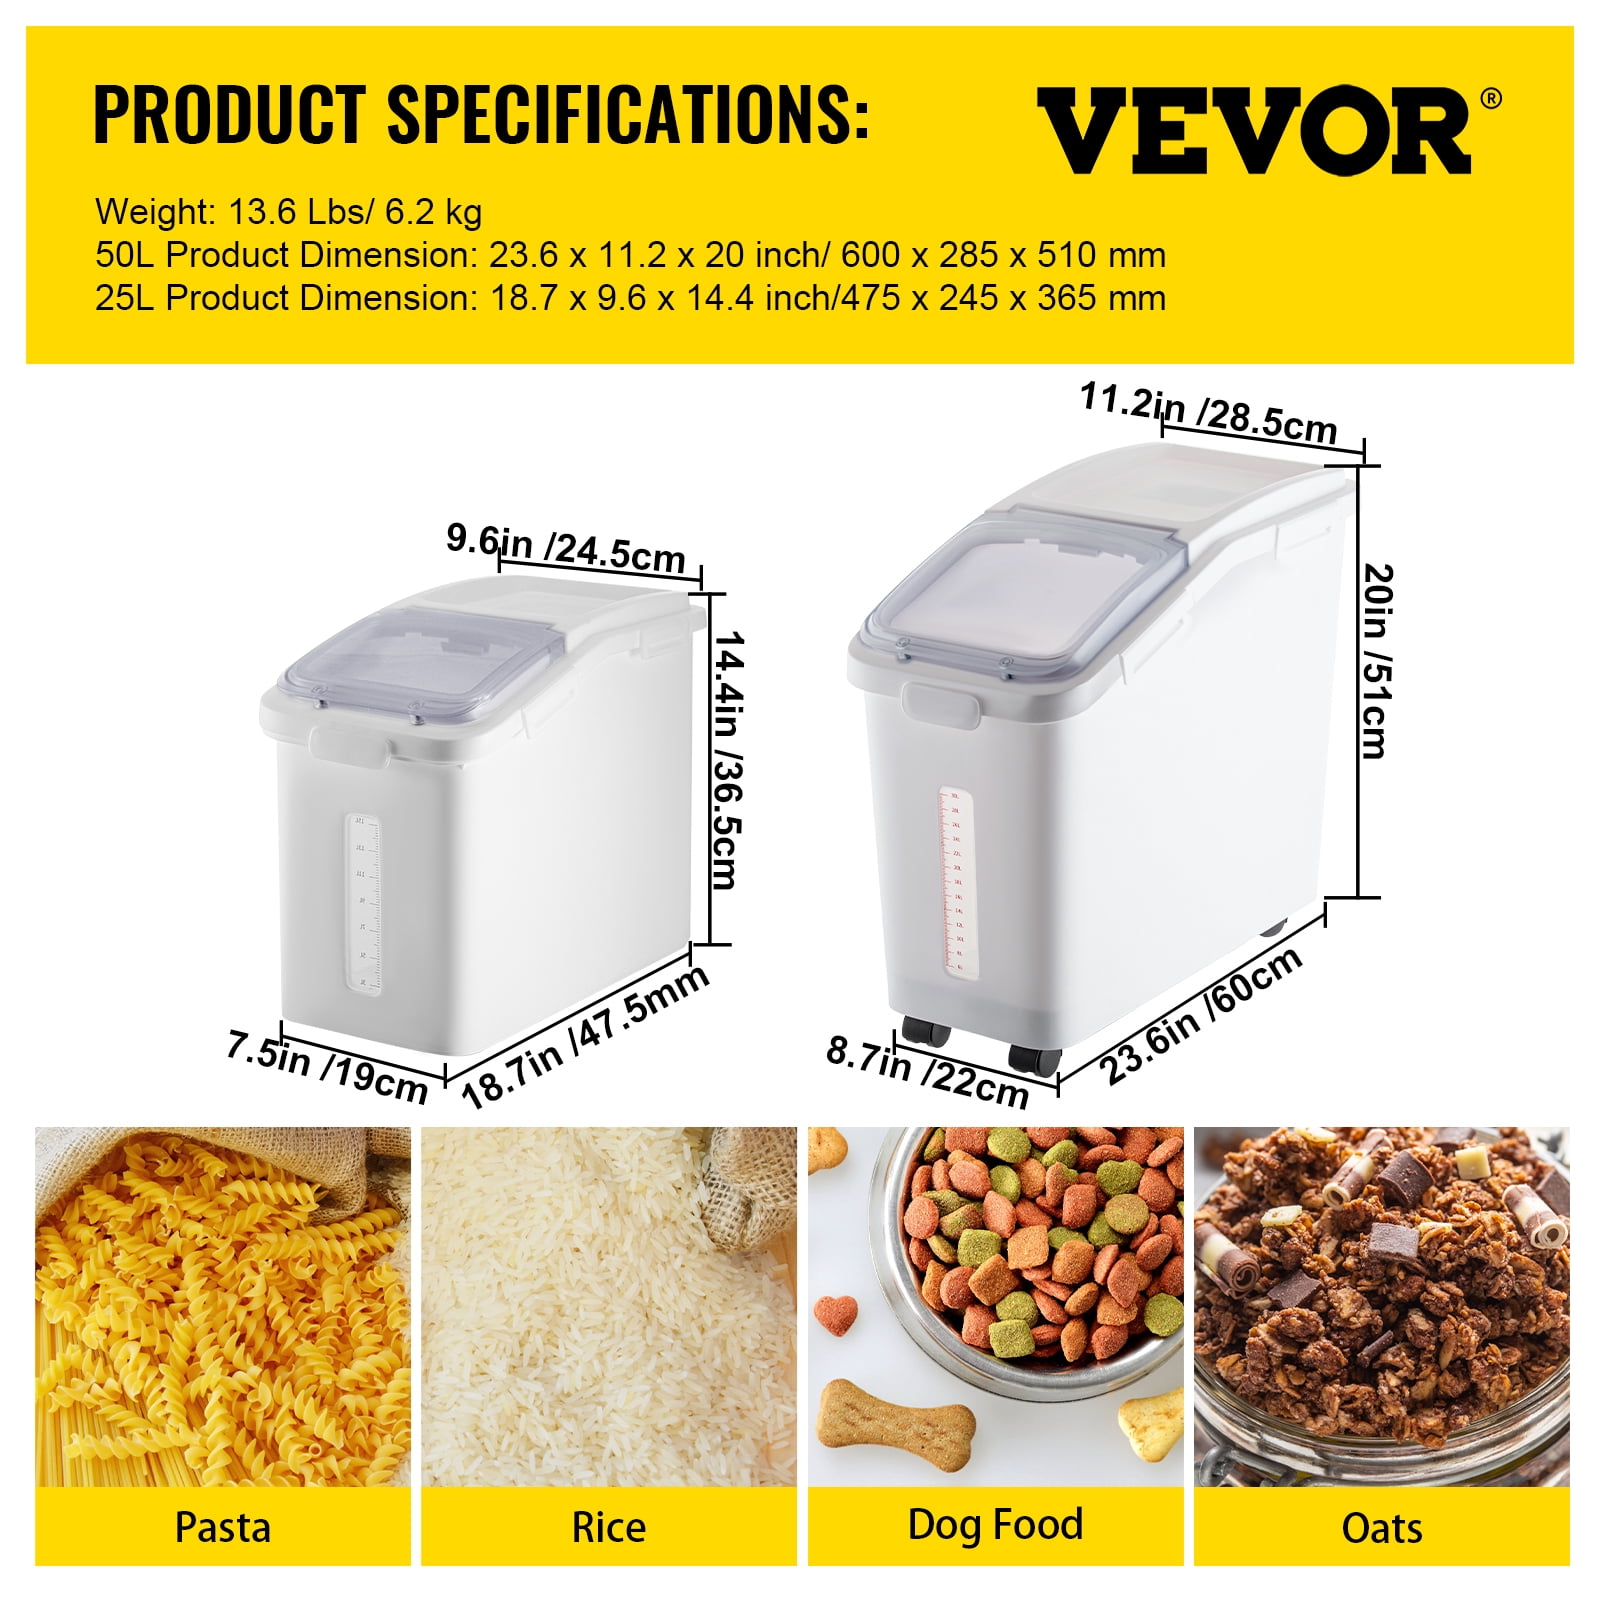 VEVOR Ingredient Storage Bin, 11.4 Gallon Capacity Shelf